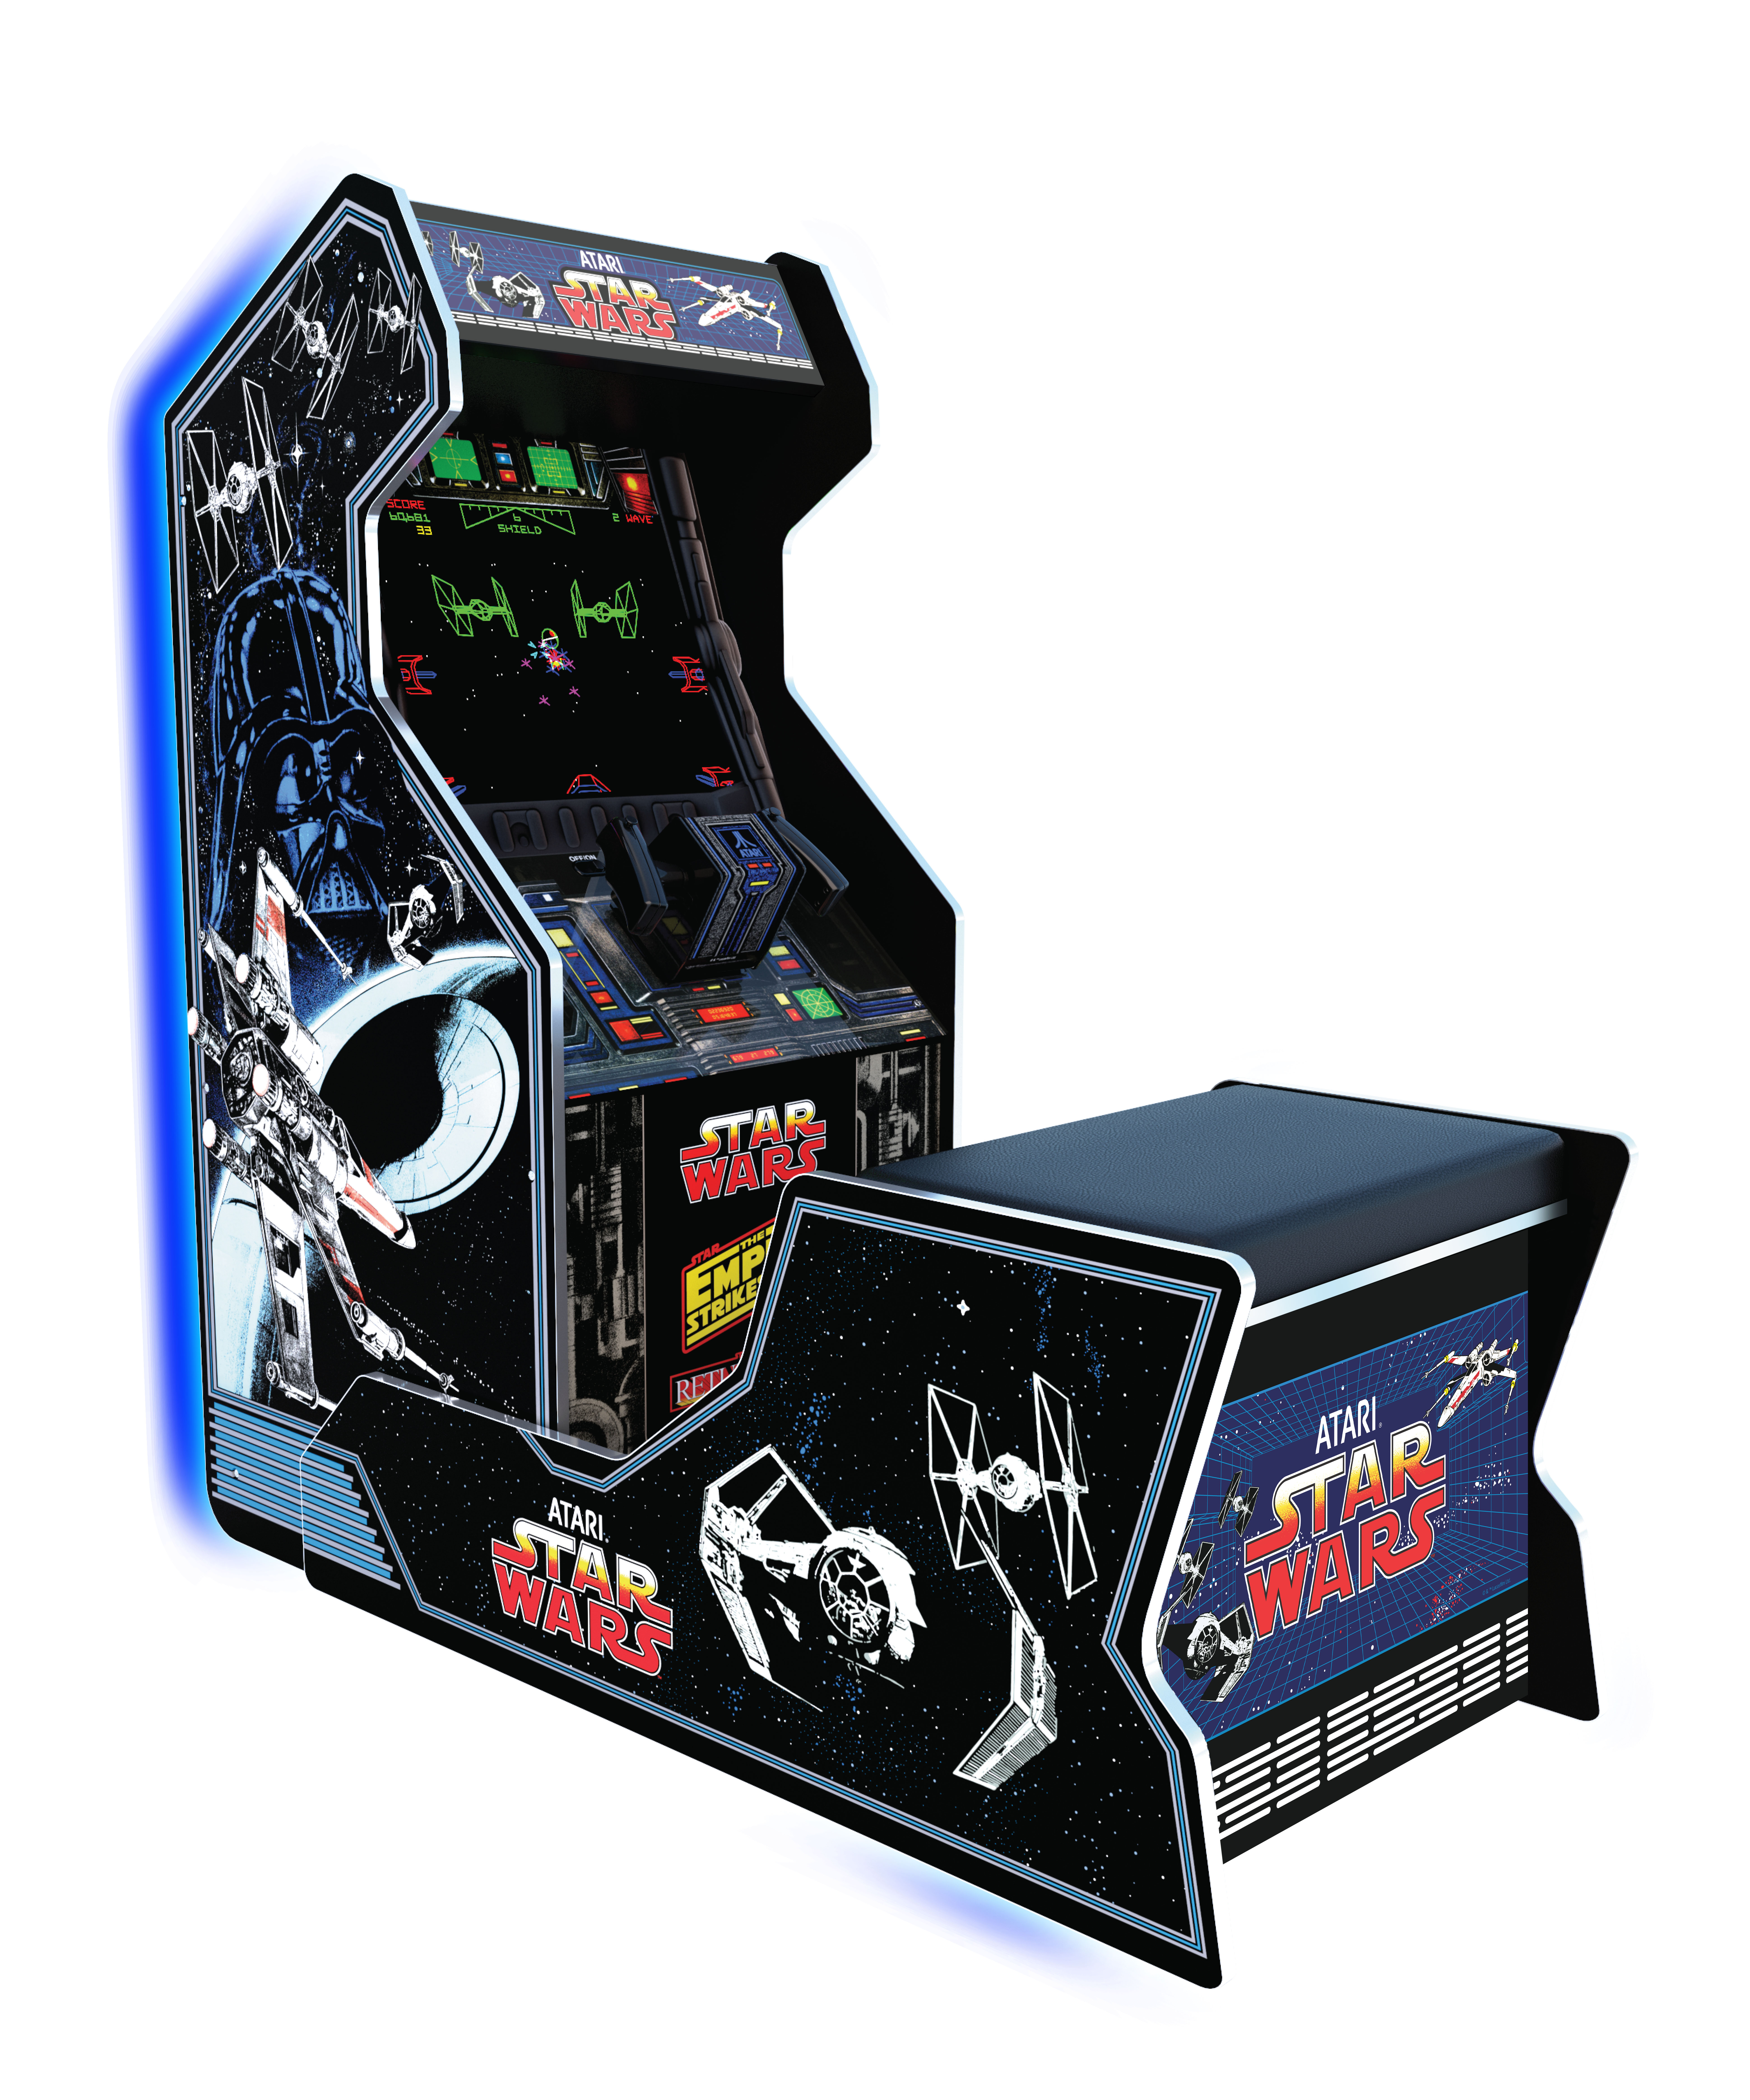 Arcade1Up, Star Wars Arcade Machine With Bench Seat - image 1 of 4